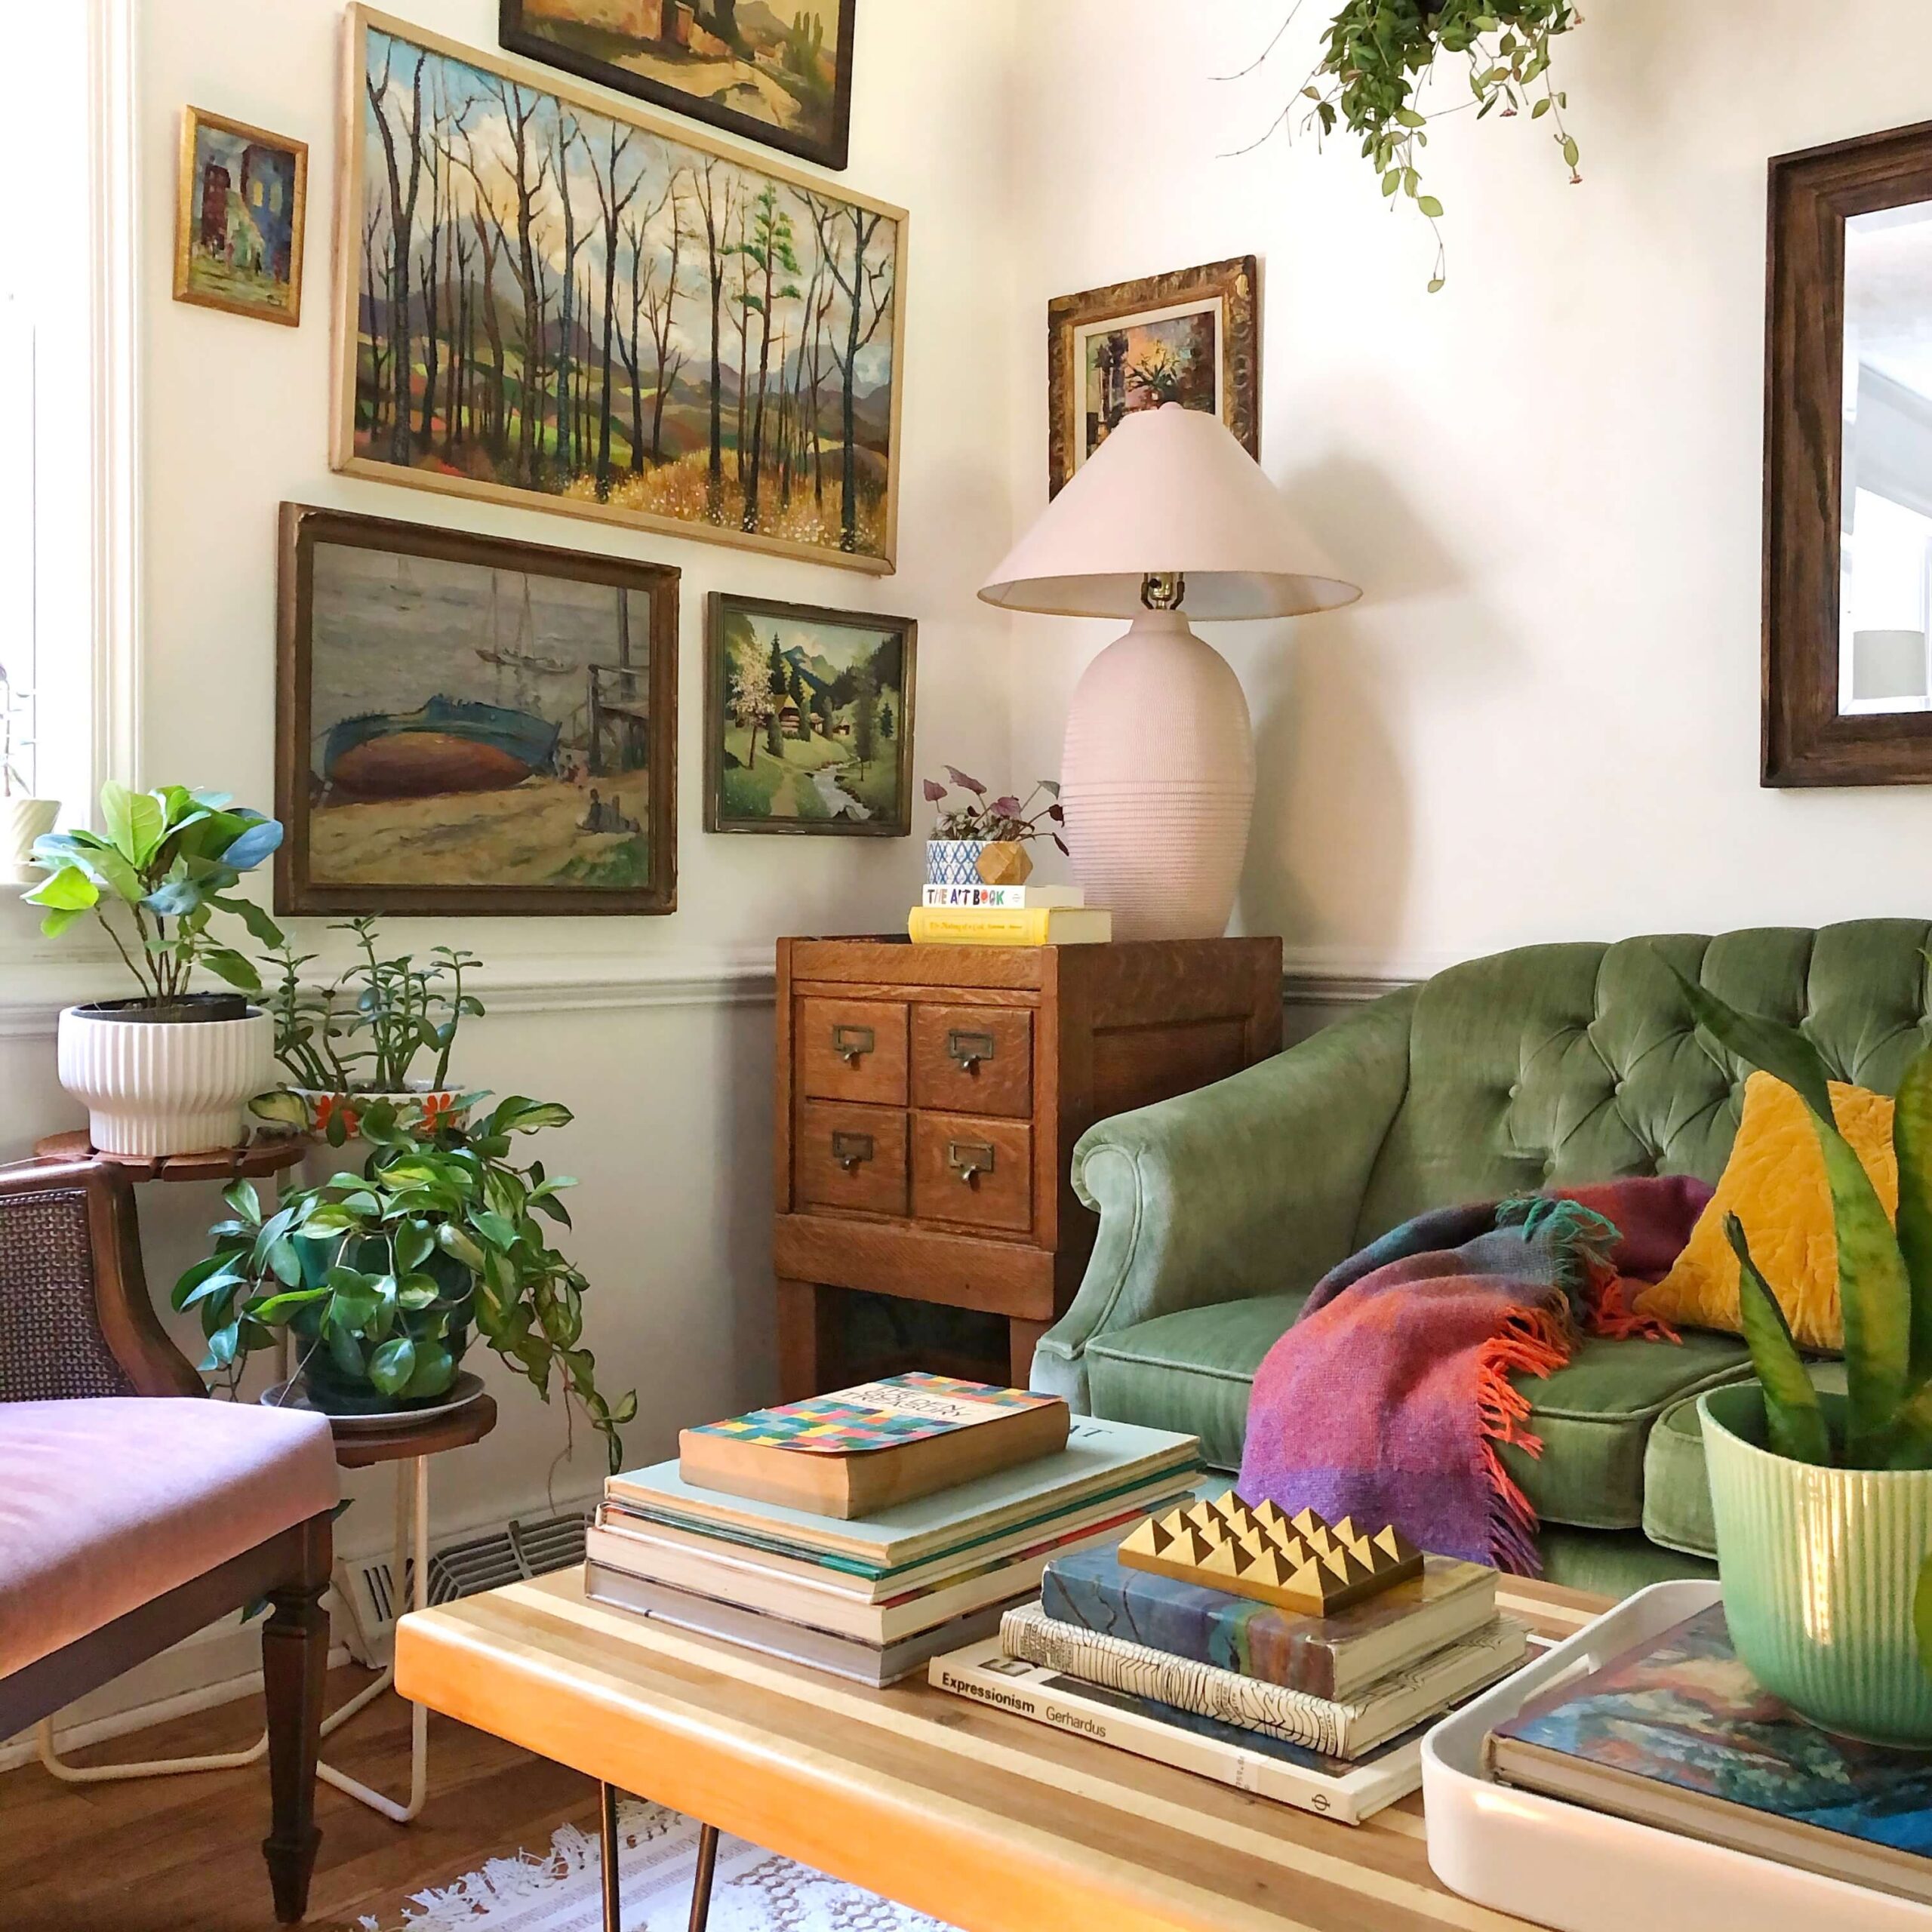 11 of the best vintage and antique furniture shops on Instagram